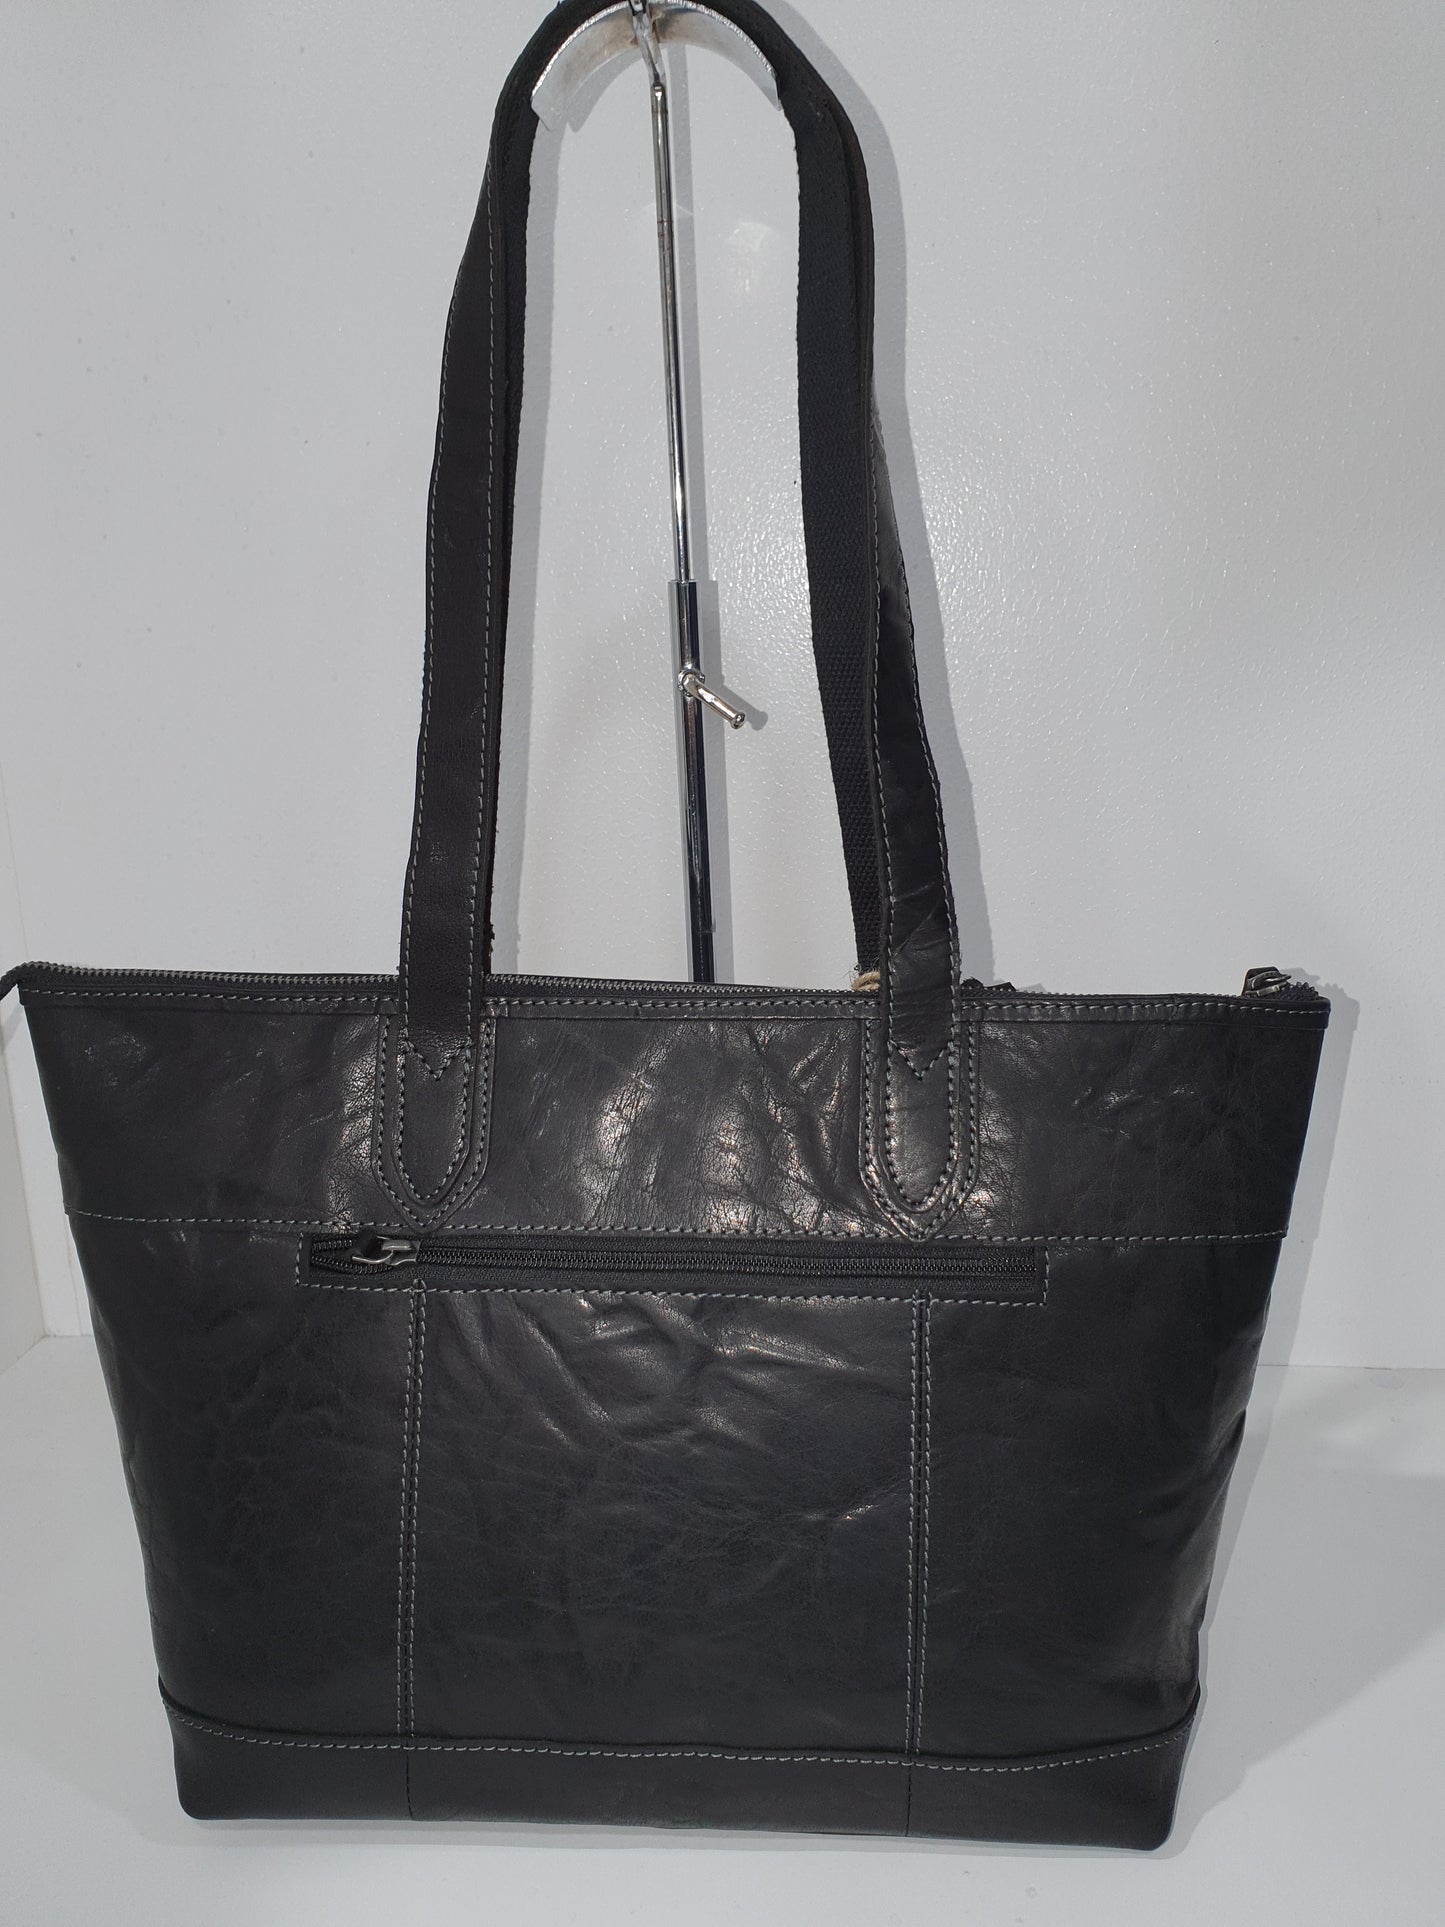 Rugged Hide - Roxy Tote leather bag Ladies shopper bag